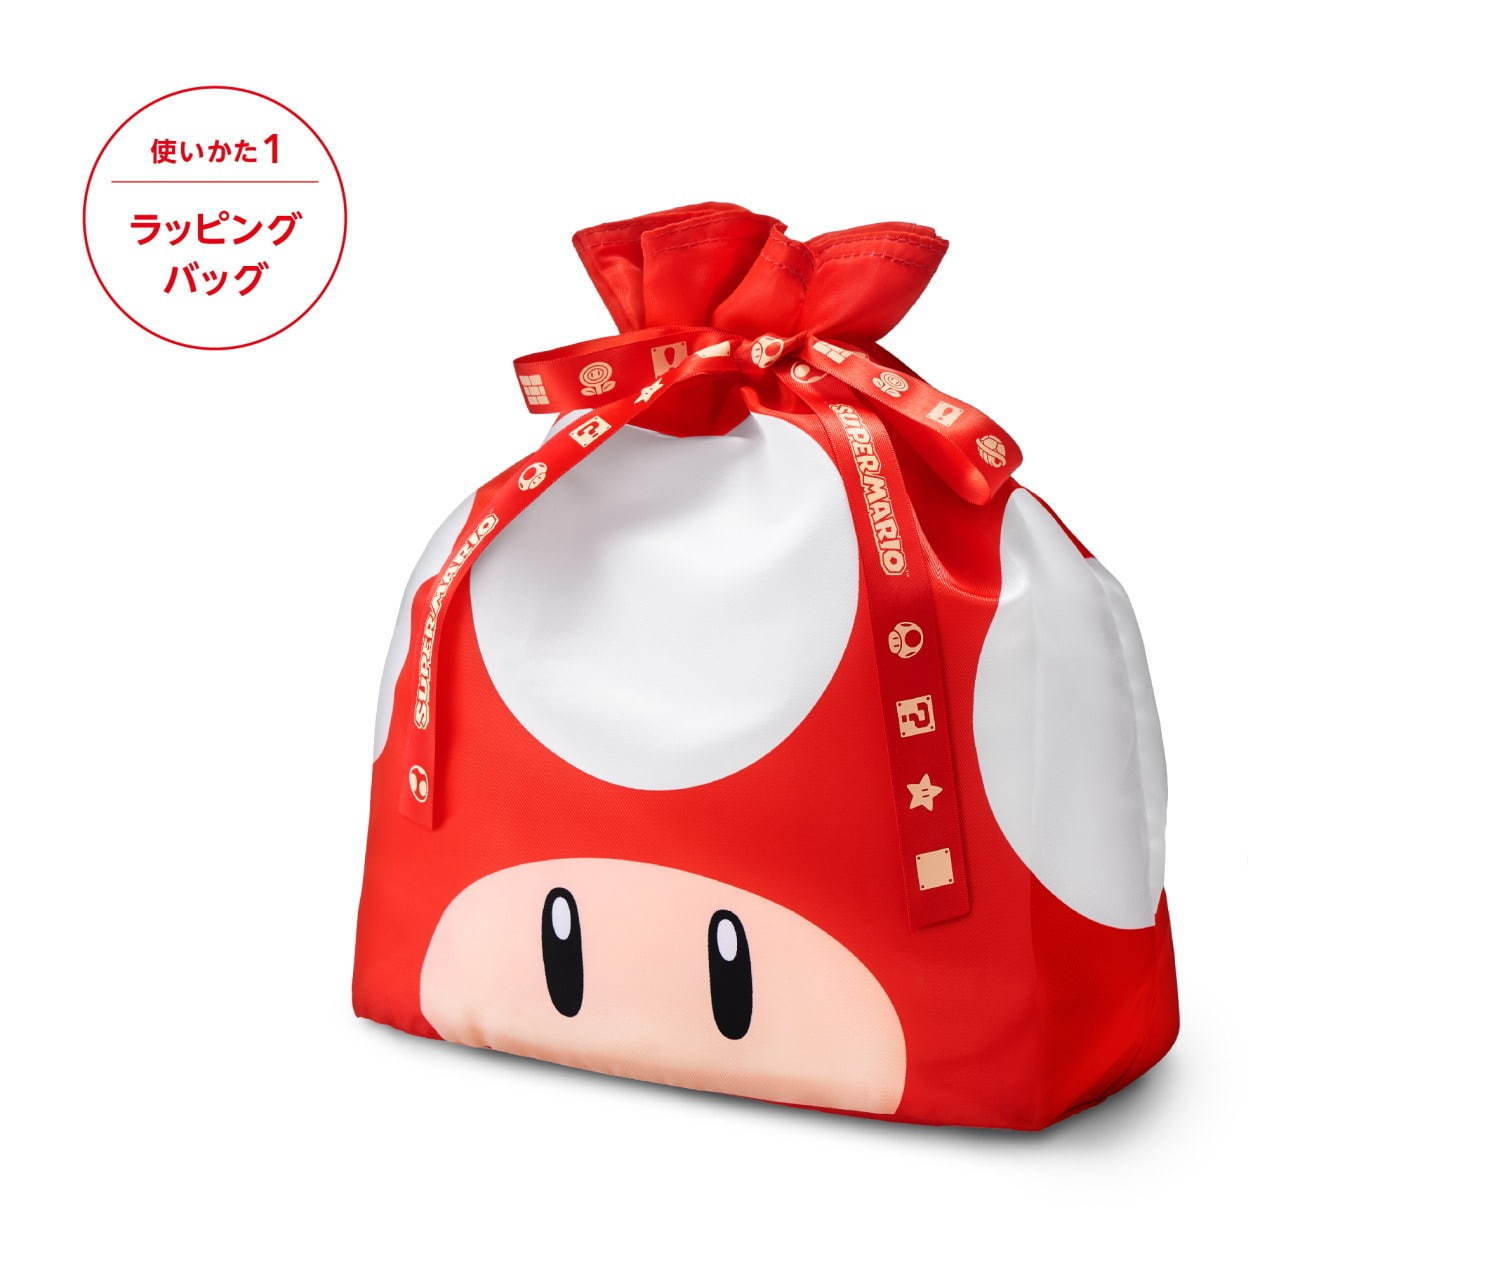 2WAYラッピングバッグS(スーパーキノコ) 1,300円＋税
© Nintendo